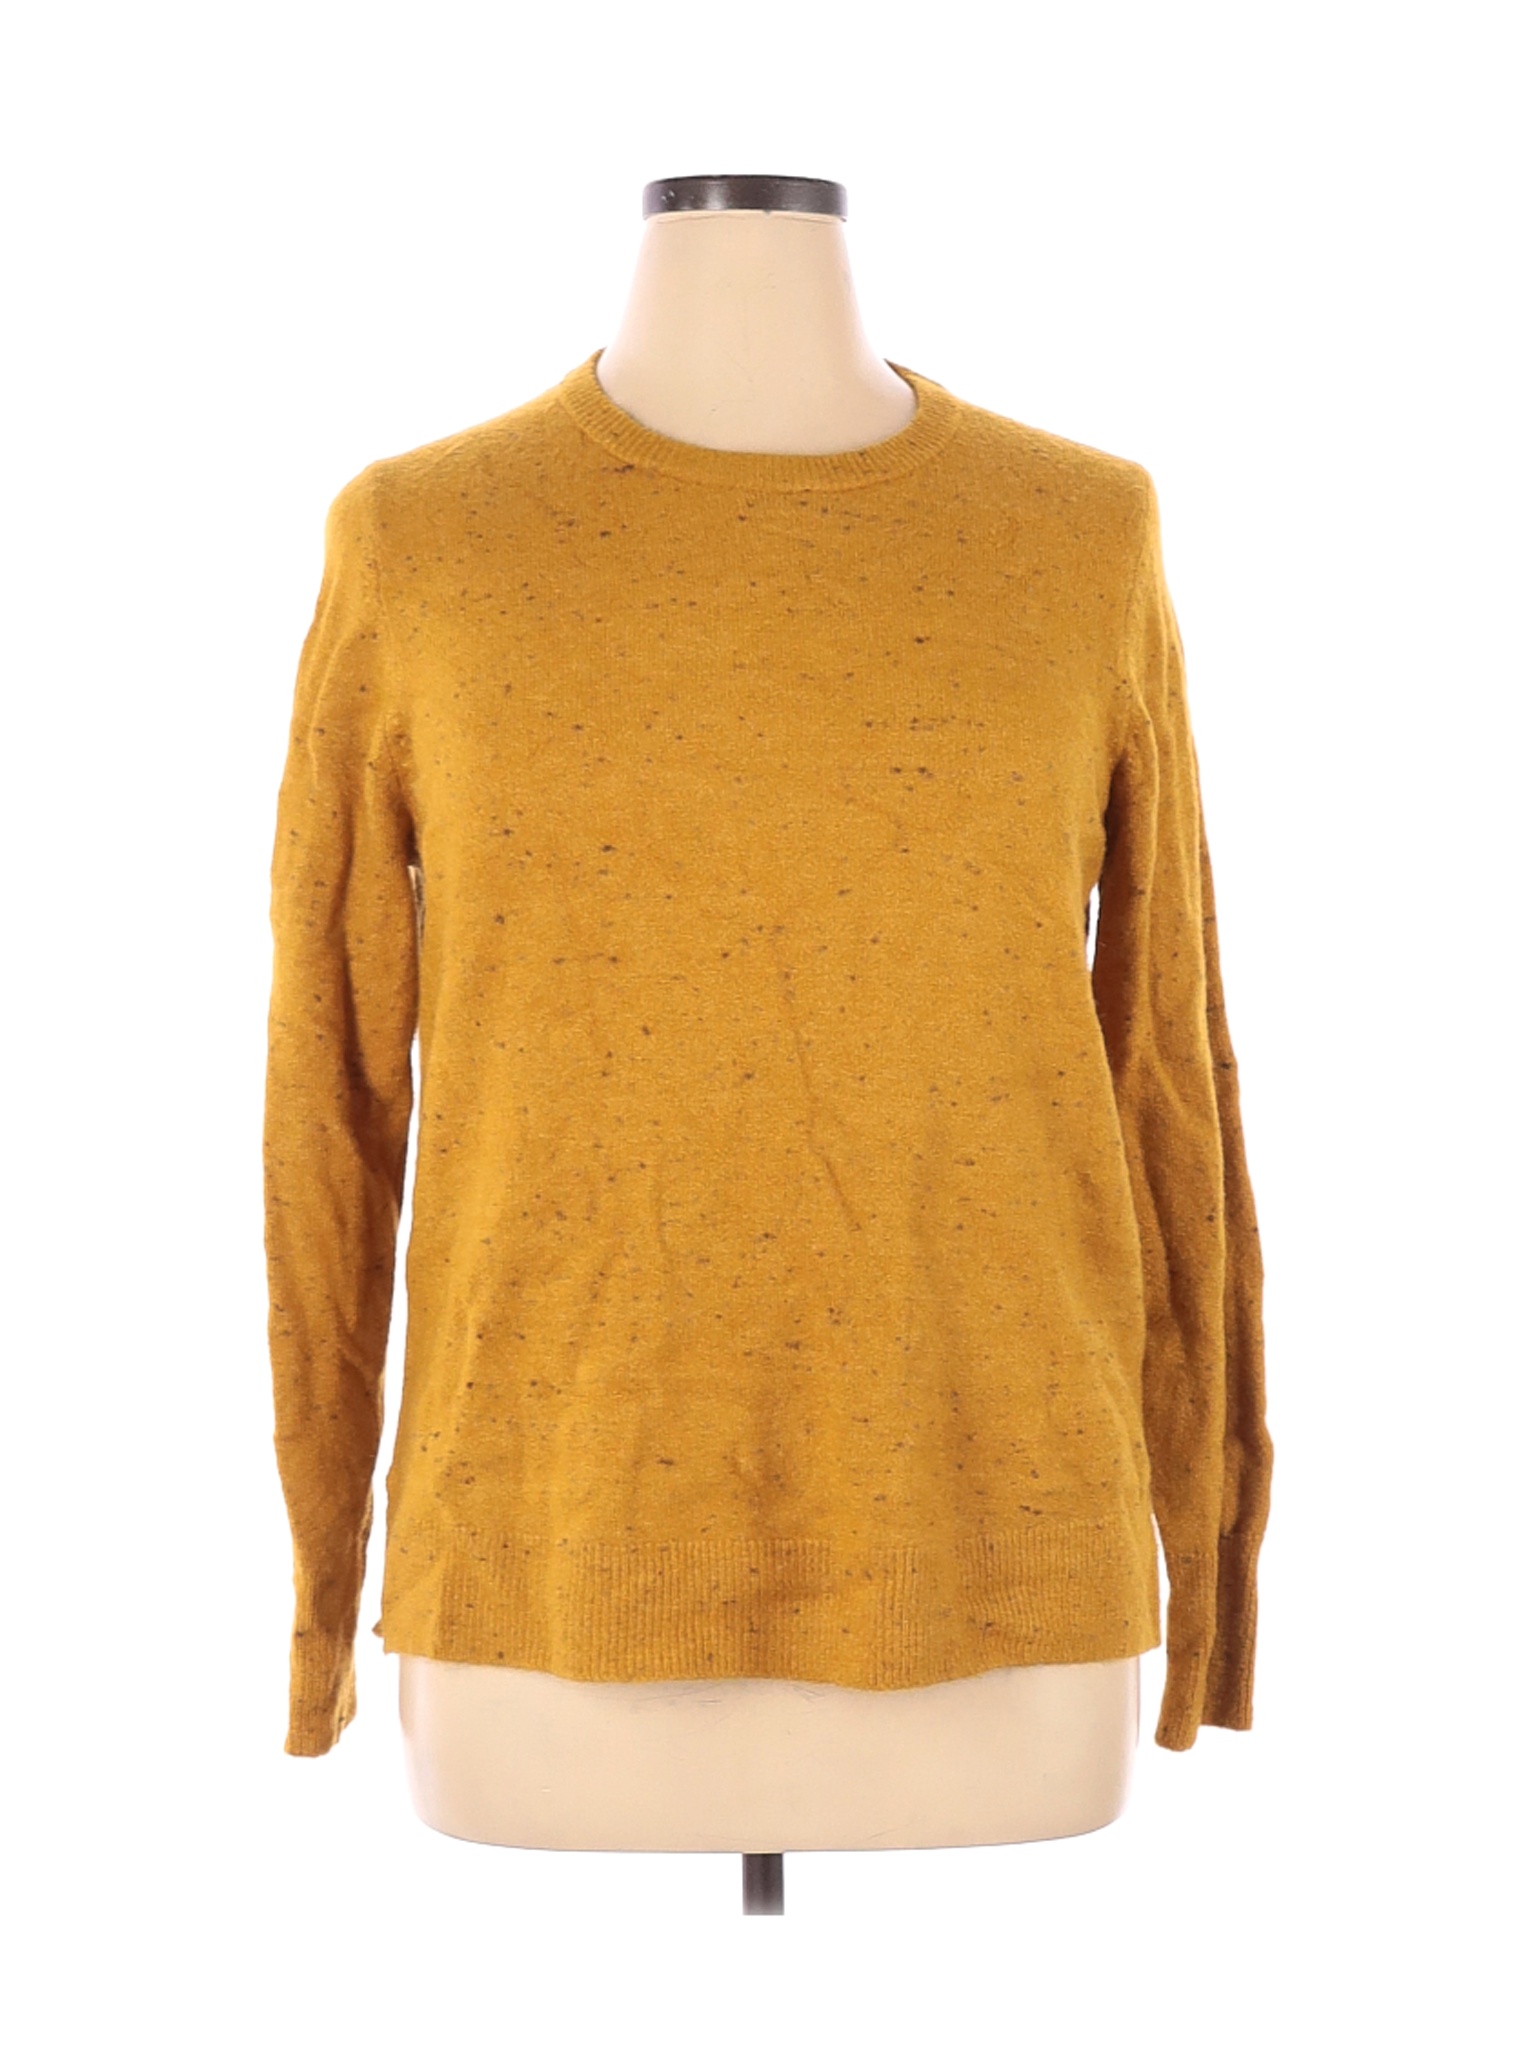 Old Navy Women Yellow Pullover Sweater XL | eBay